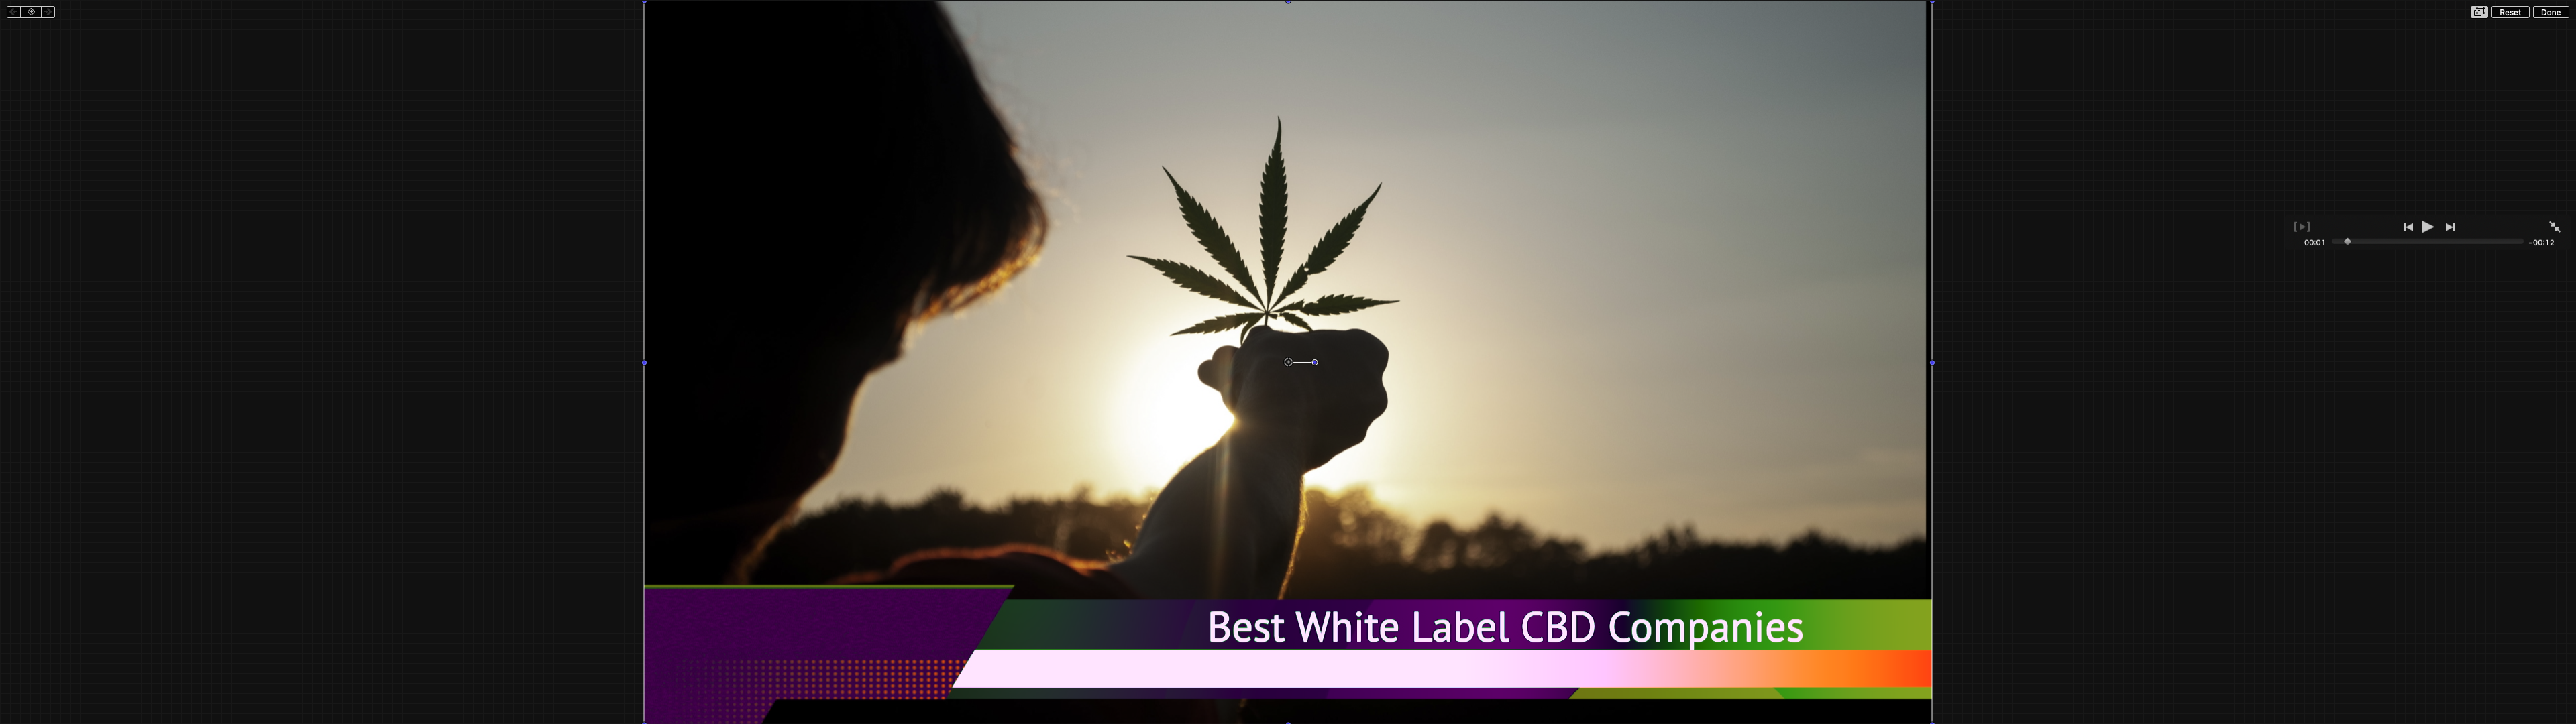 Best White Label CBD